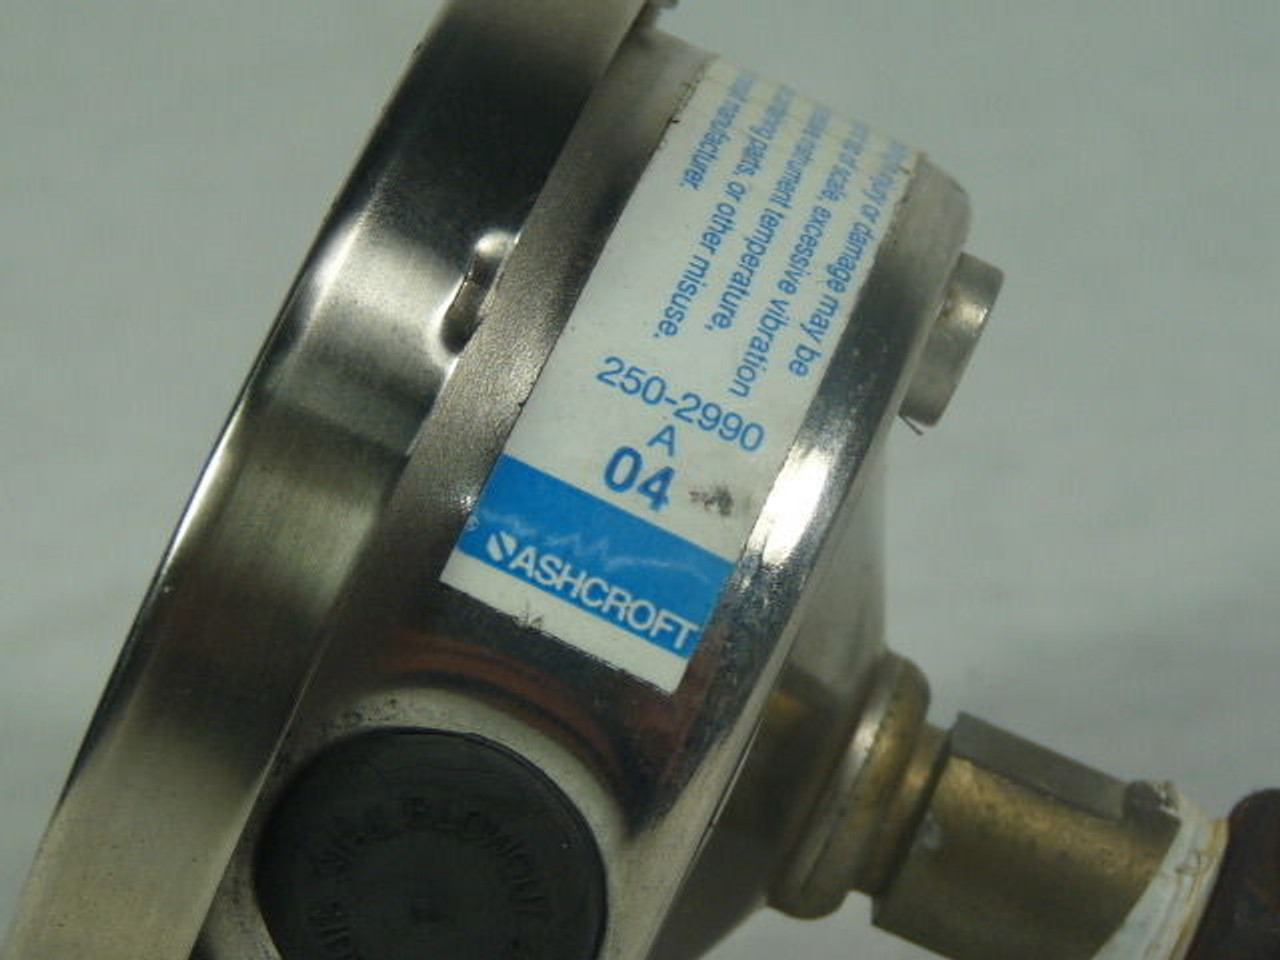 Ashcroft 250-2990-A04 Pressure Gauge 1000 kPa USED